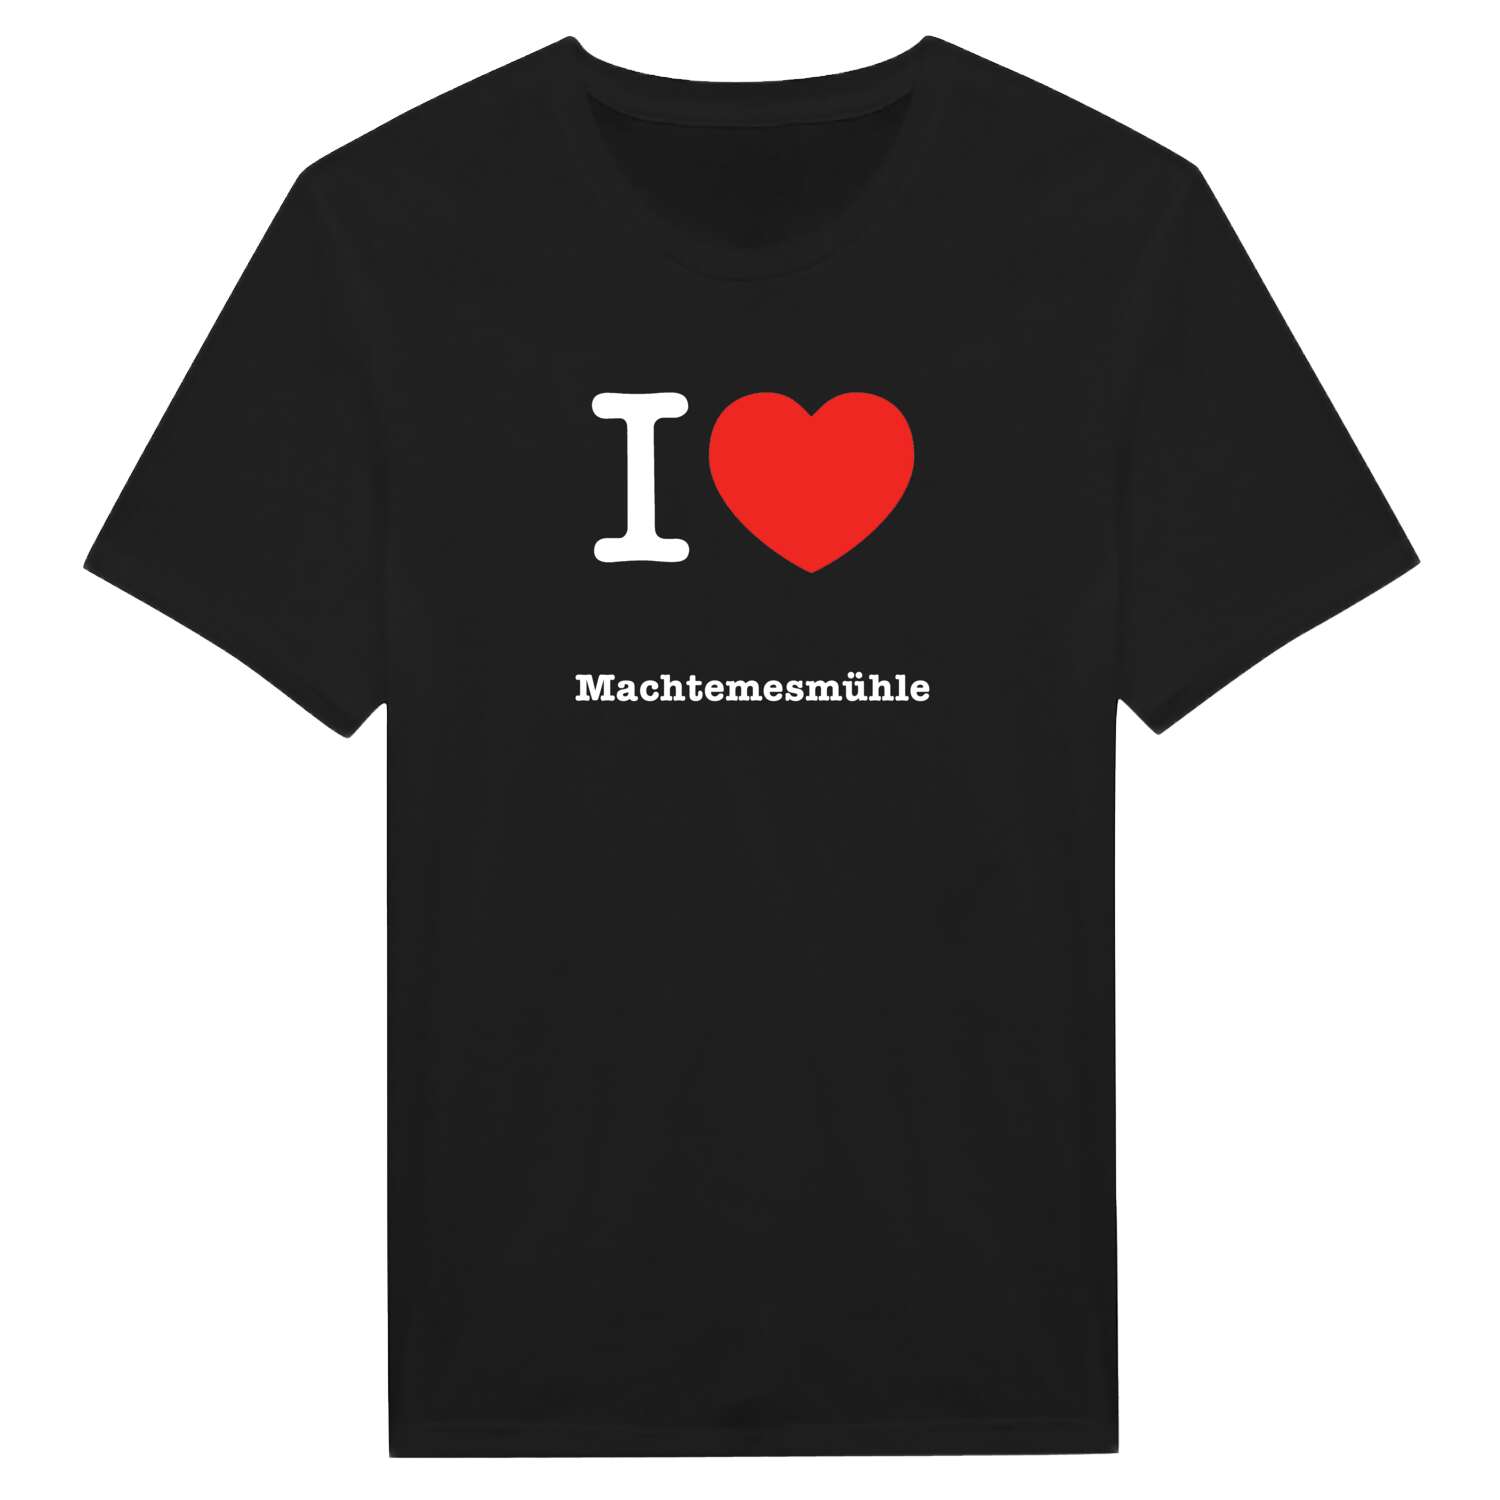 Machtemesmühle T-Shirt »I love«